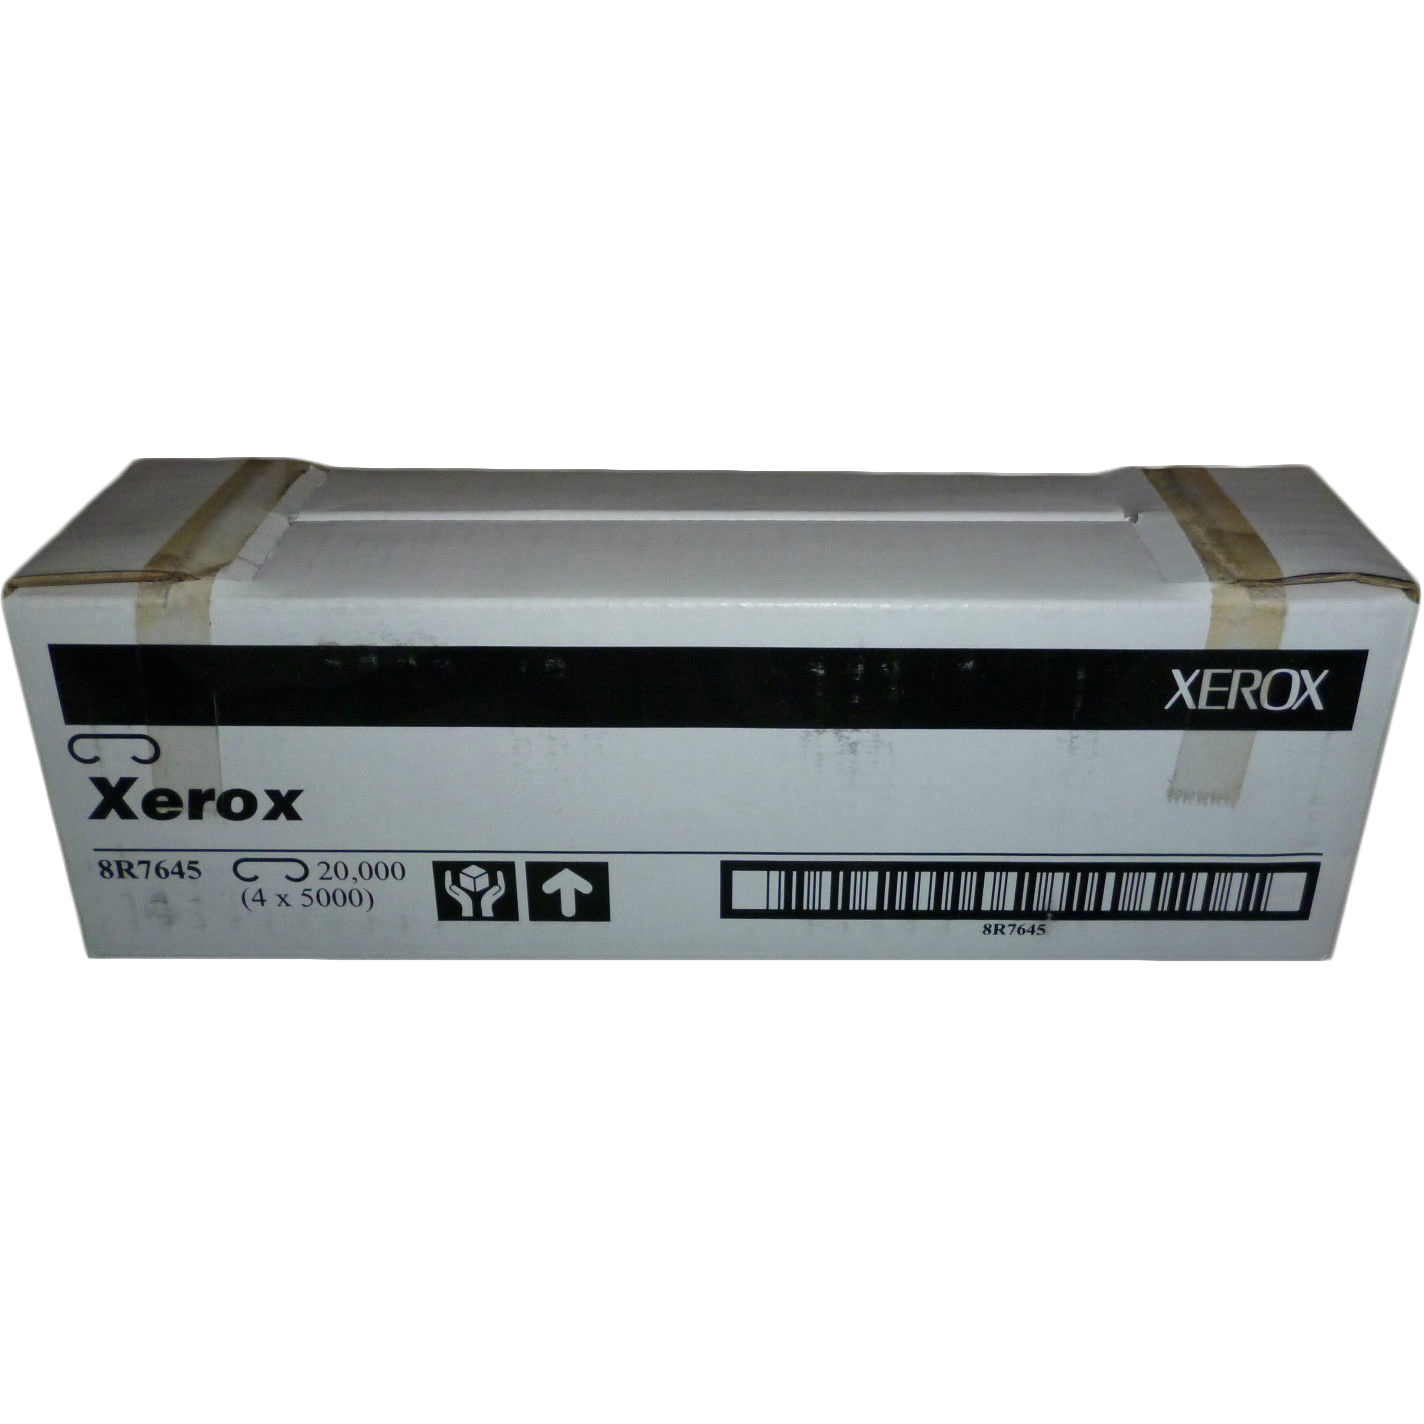 Original Xerox 8R07645 Staple Cartridge (008R07645)